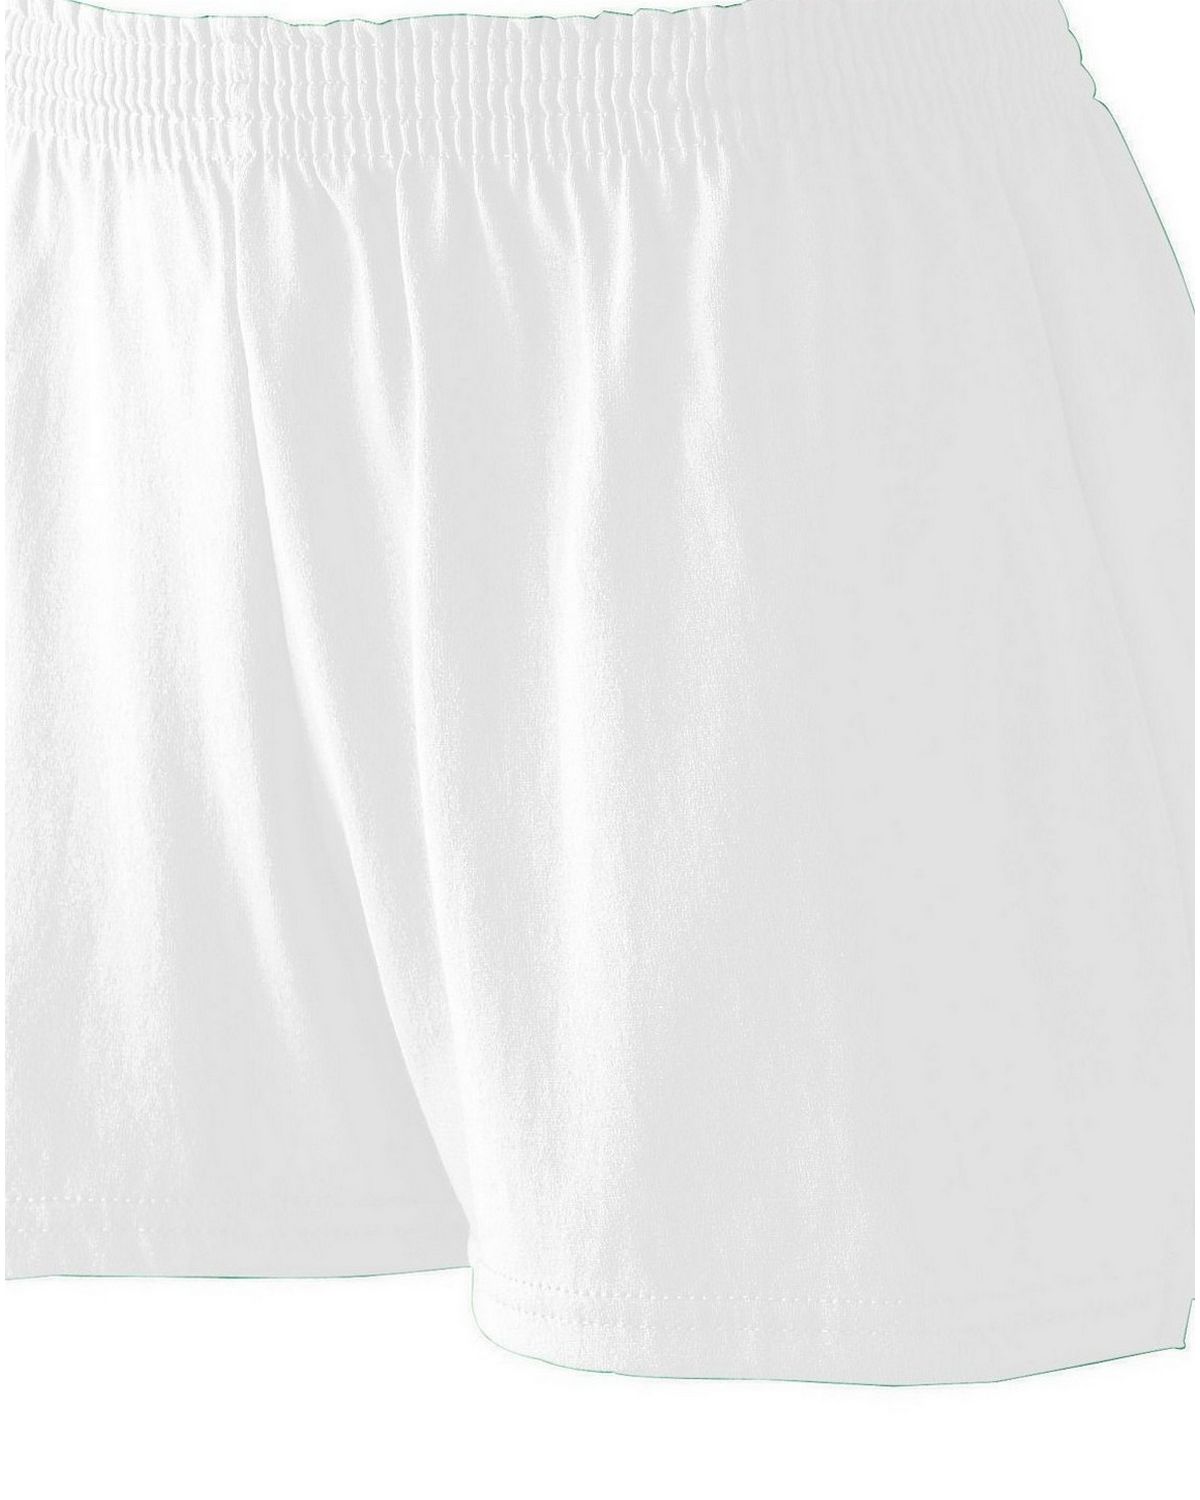 white jersey shorts womens